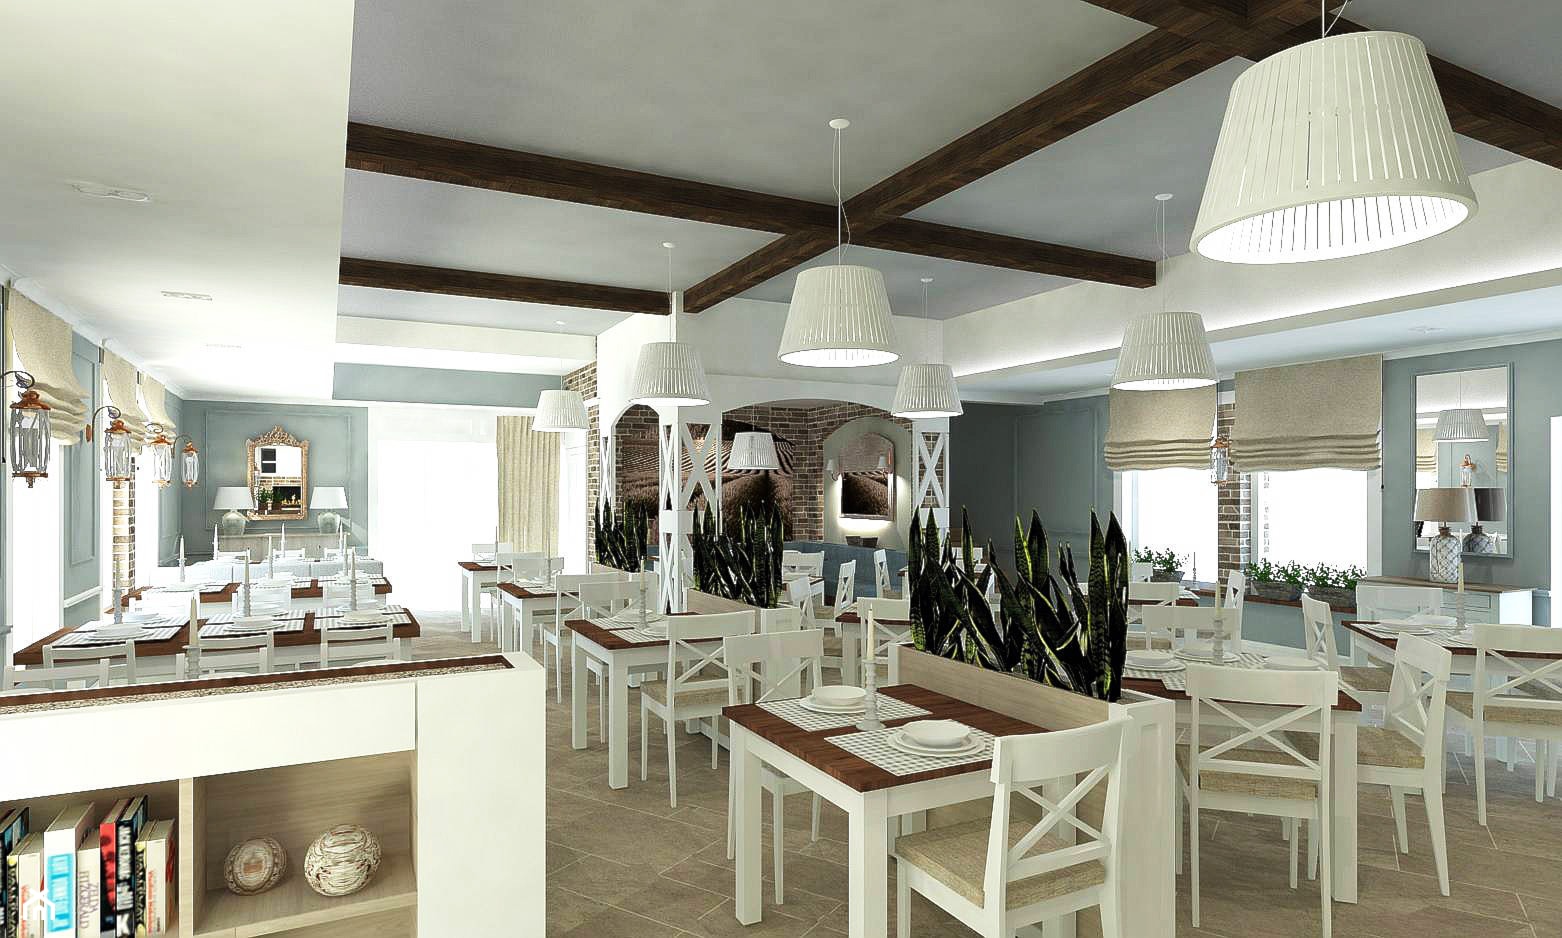 Sala Restauracyjna - zdjęcie od InteriorIdea - Homebook